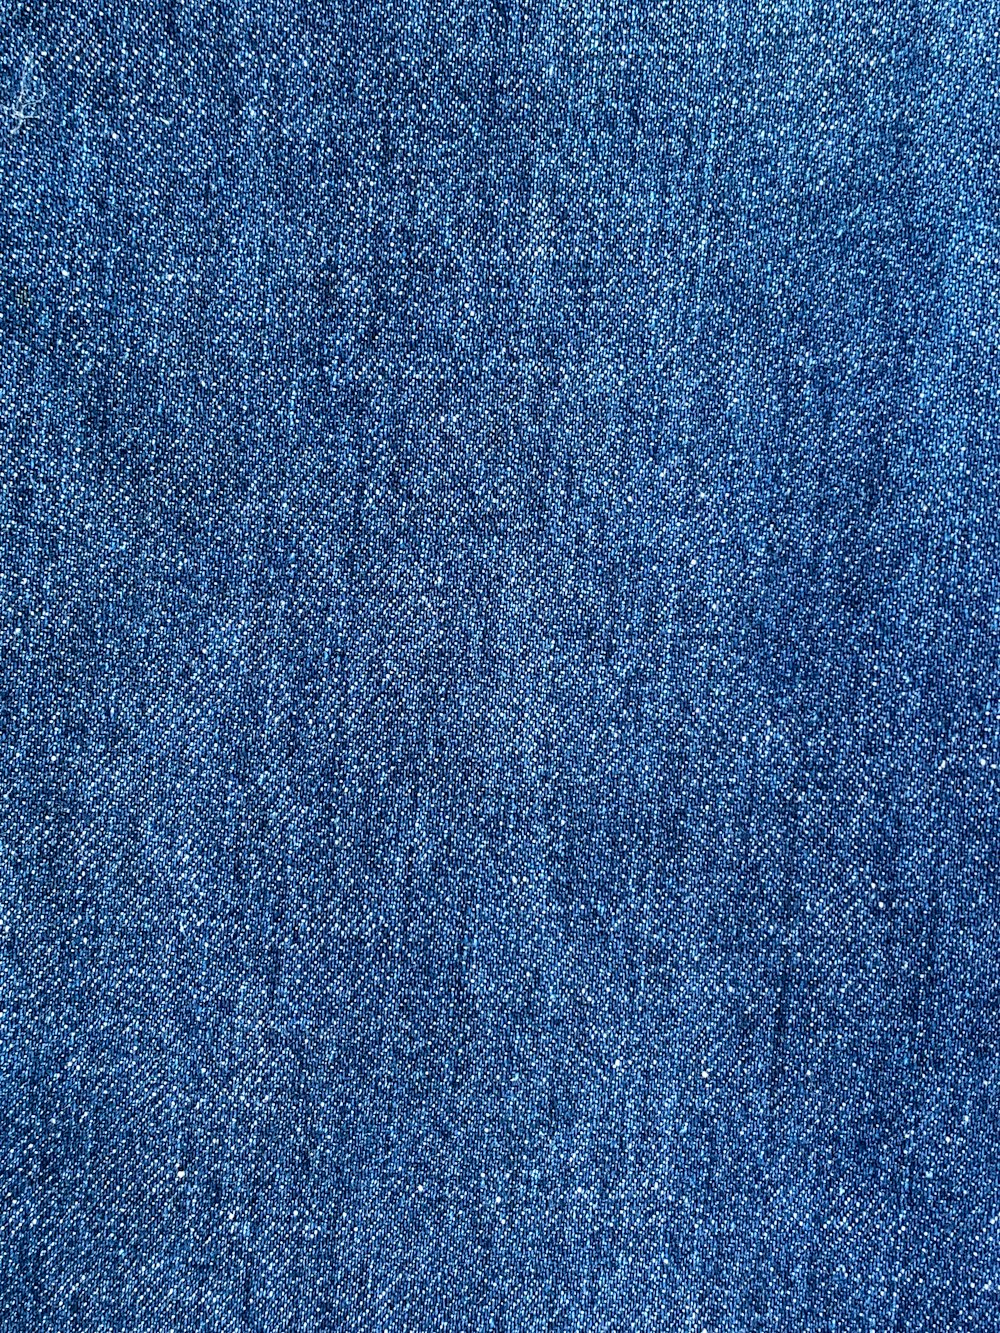 A close a blue jean fabric – Free Denim Image on Unsplash